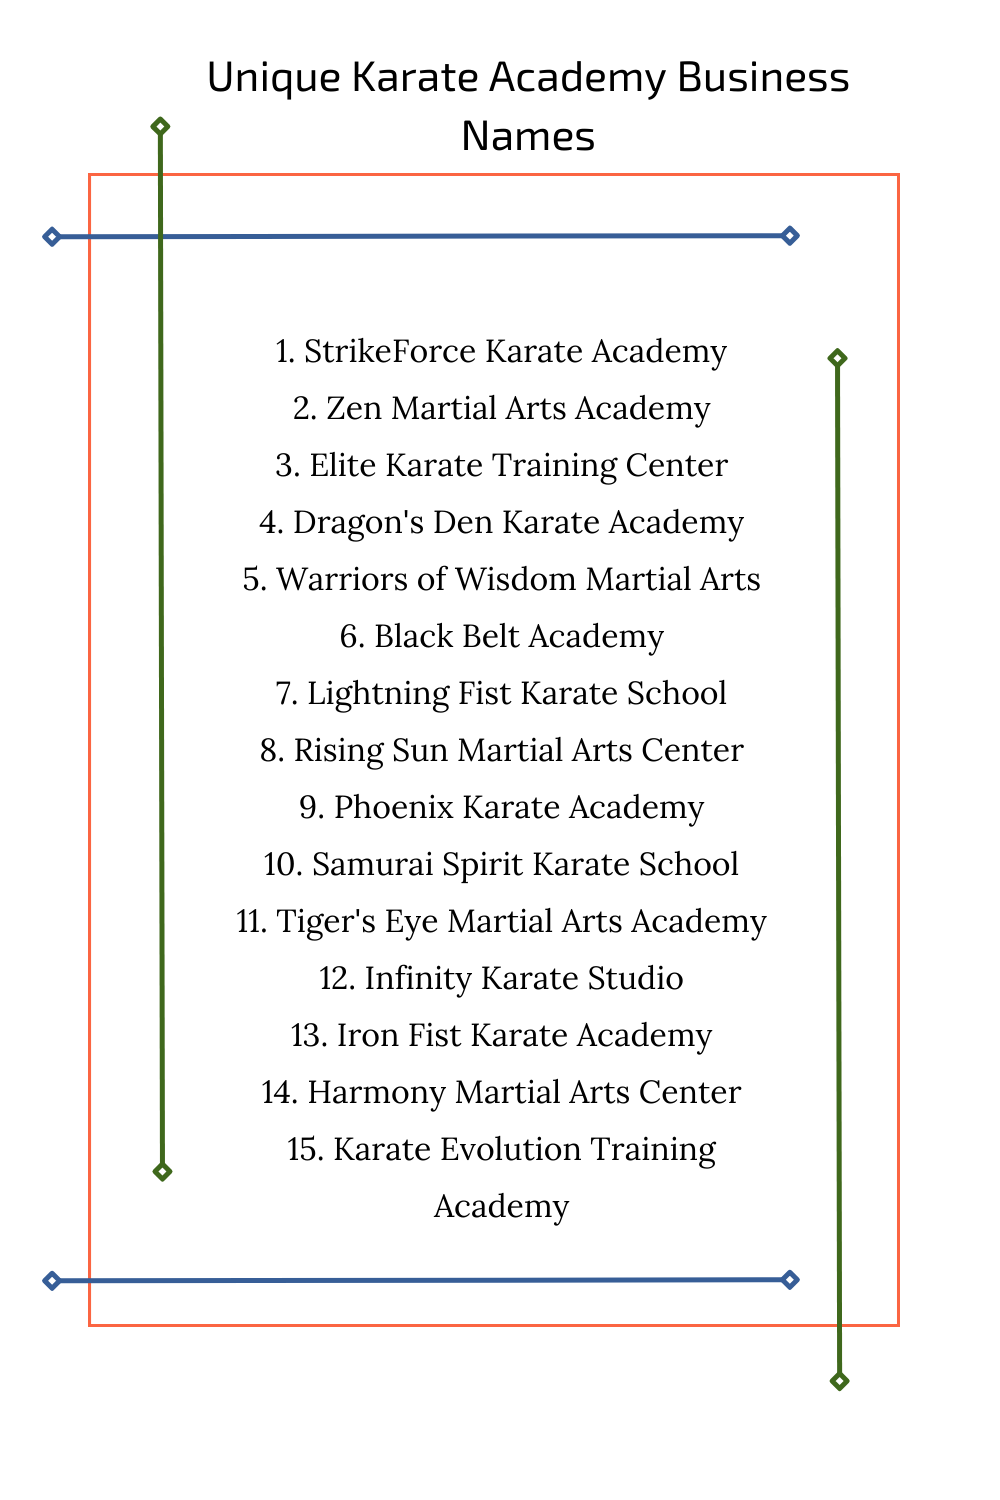 Unique Karate Academy Business Names